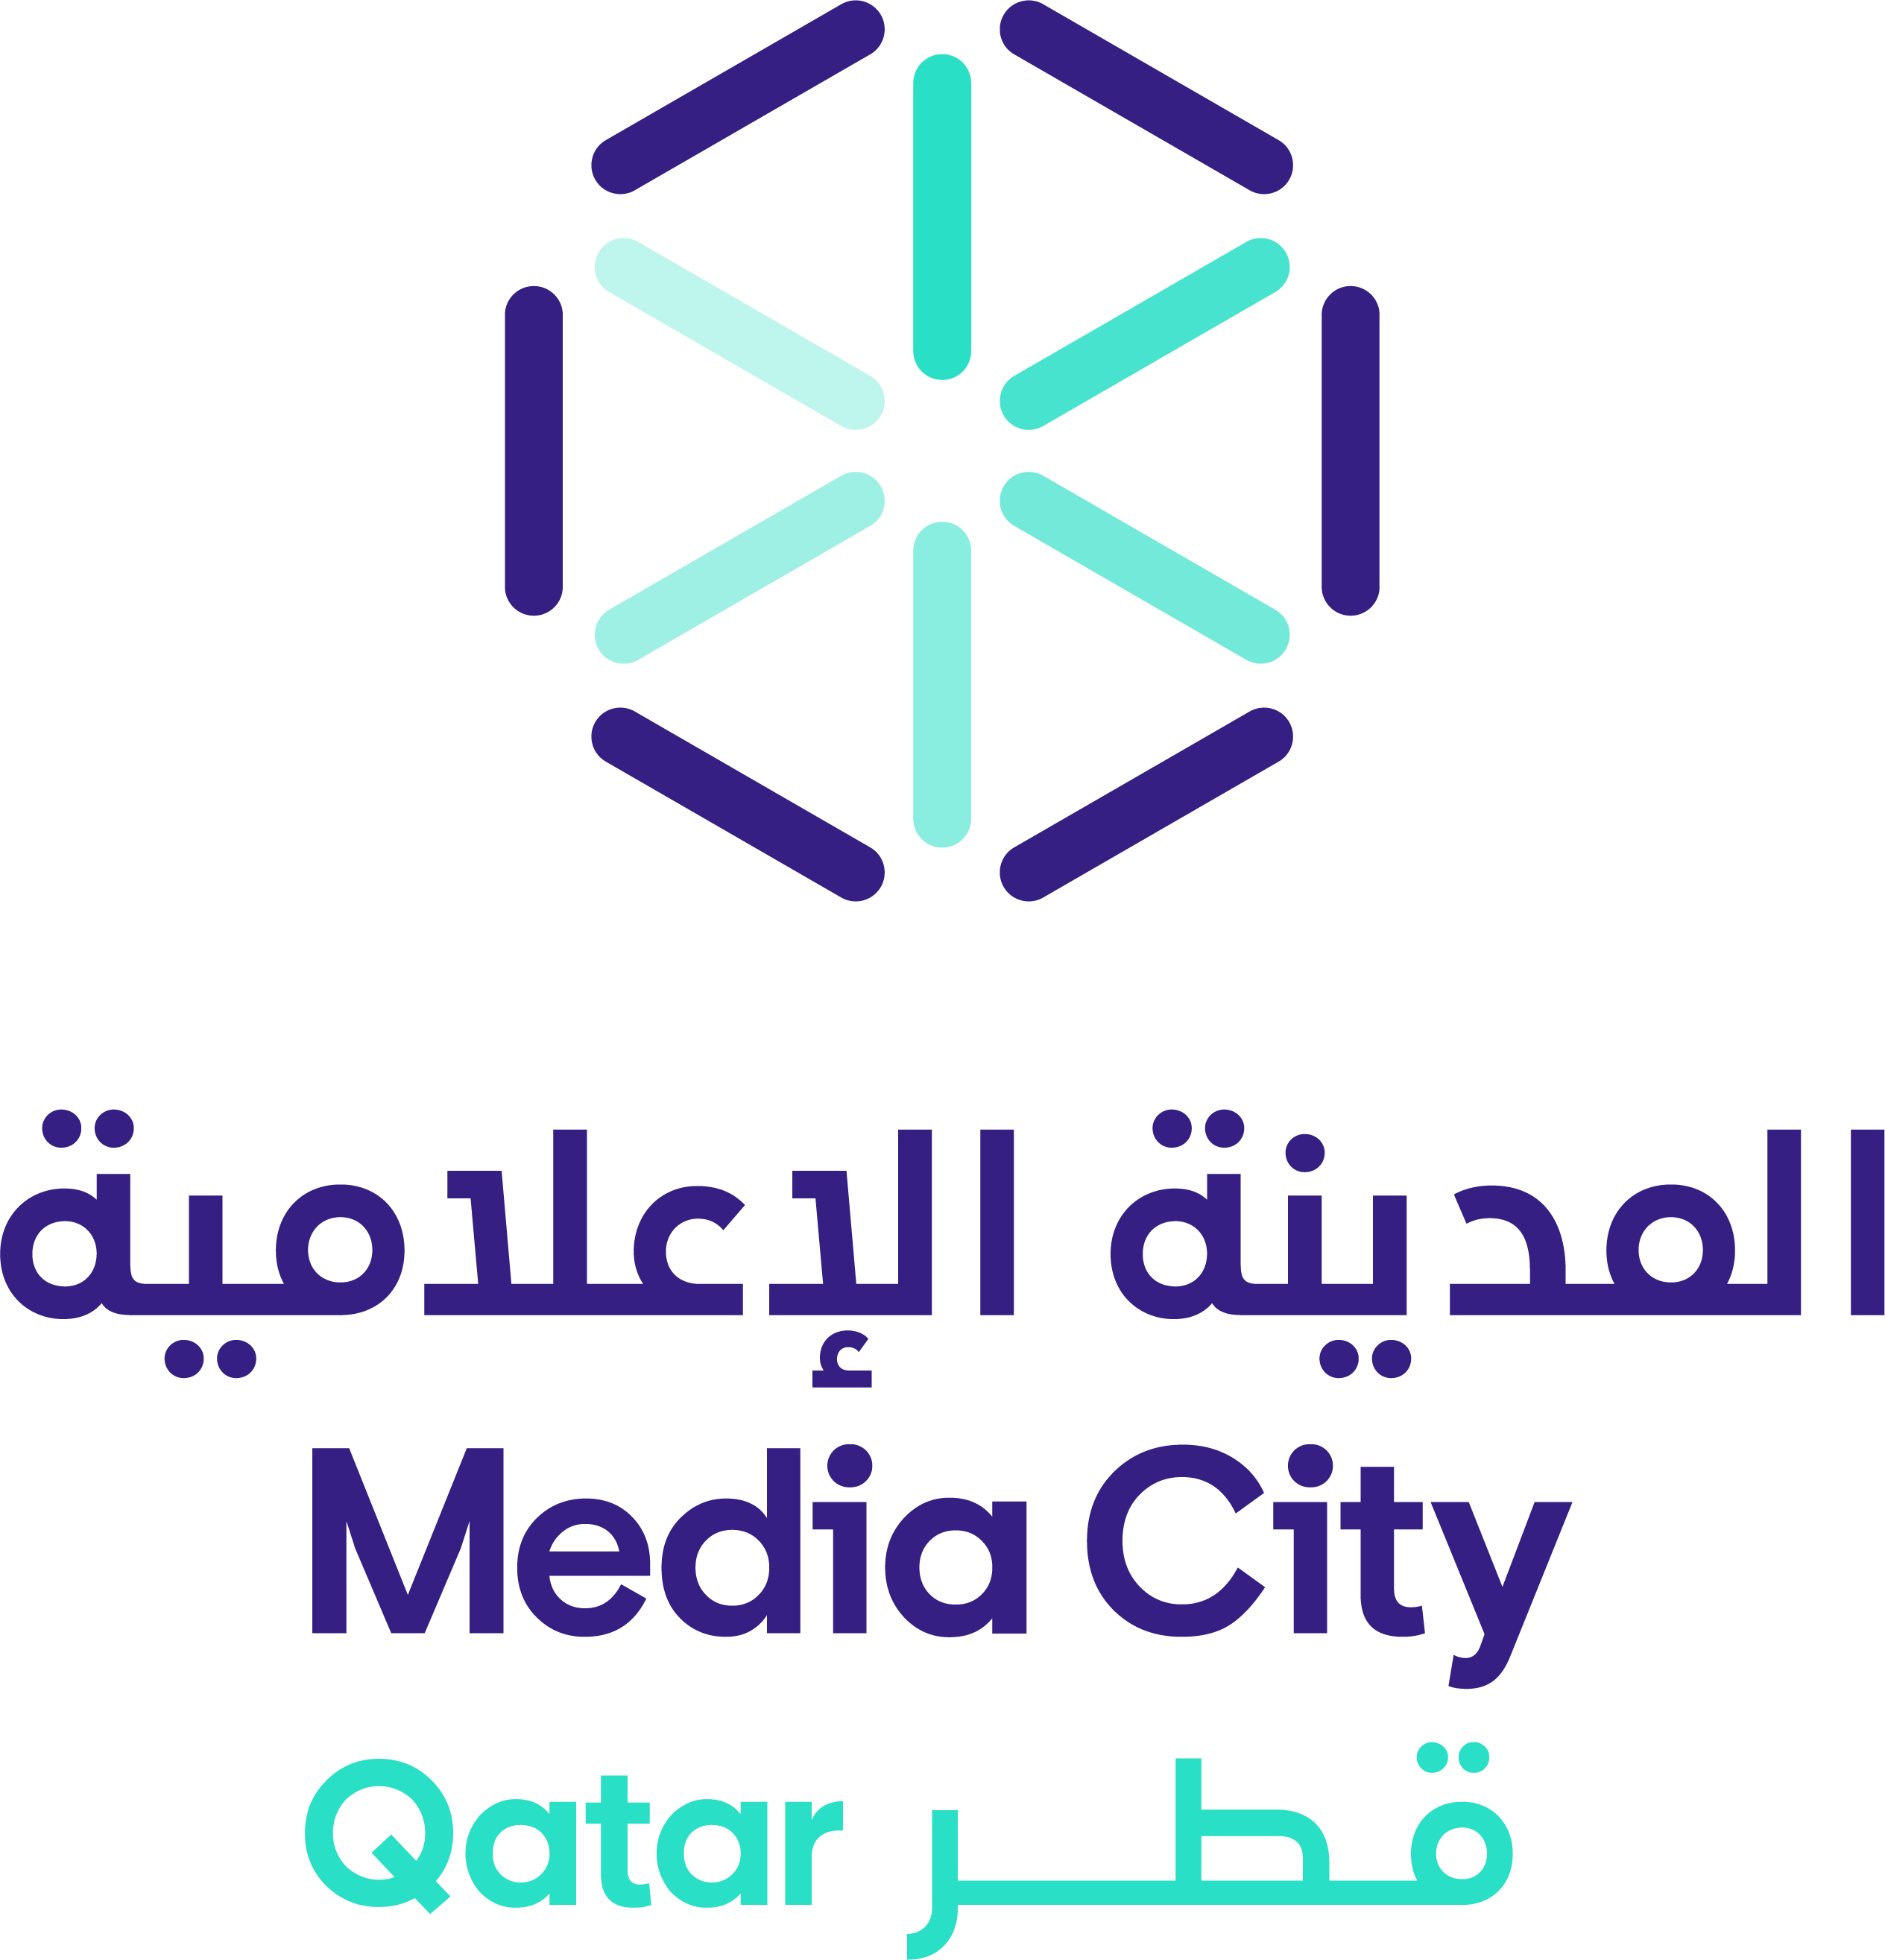 Media City Qatar logo